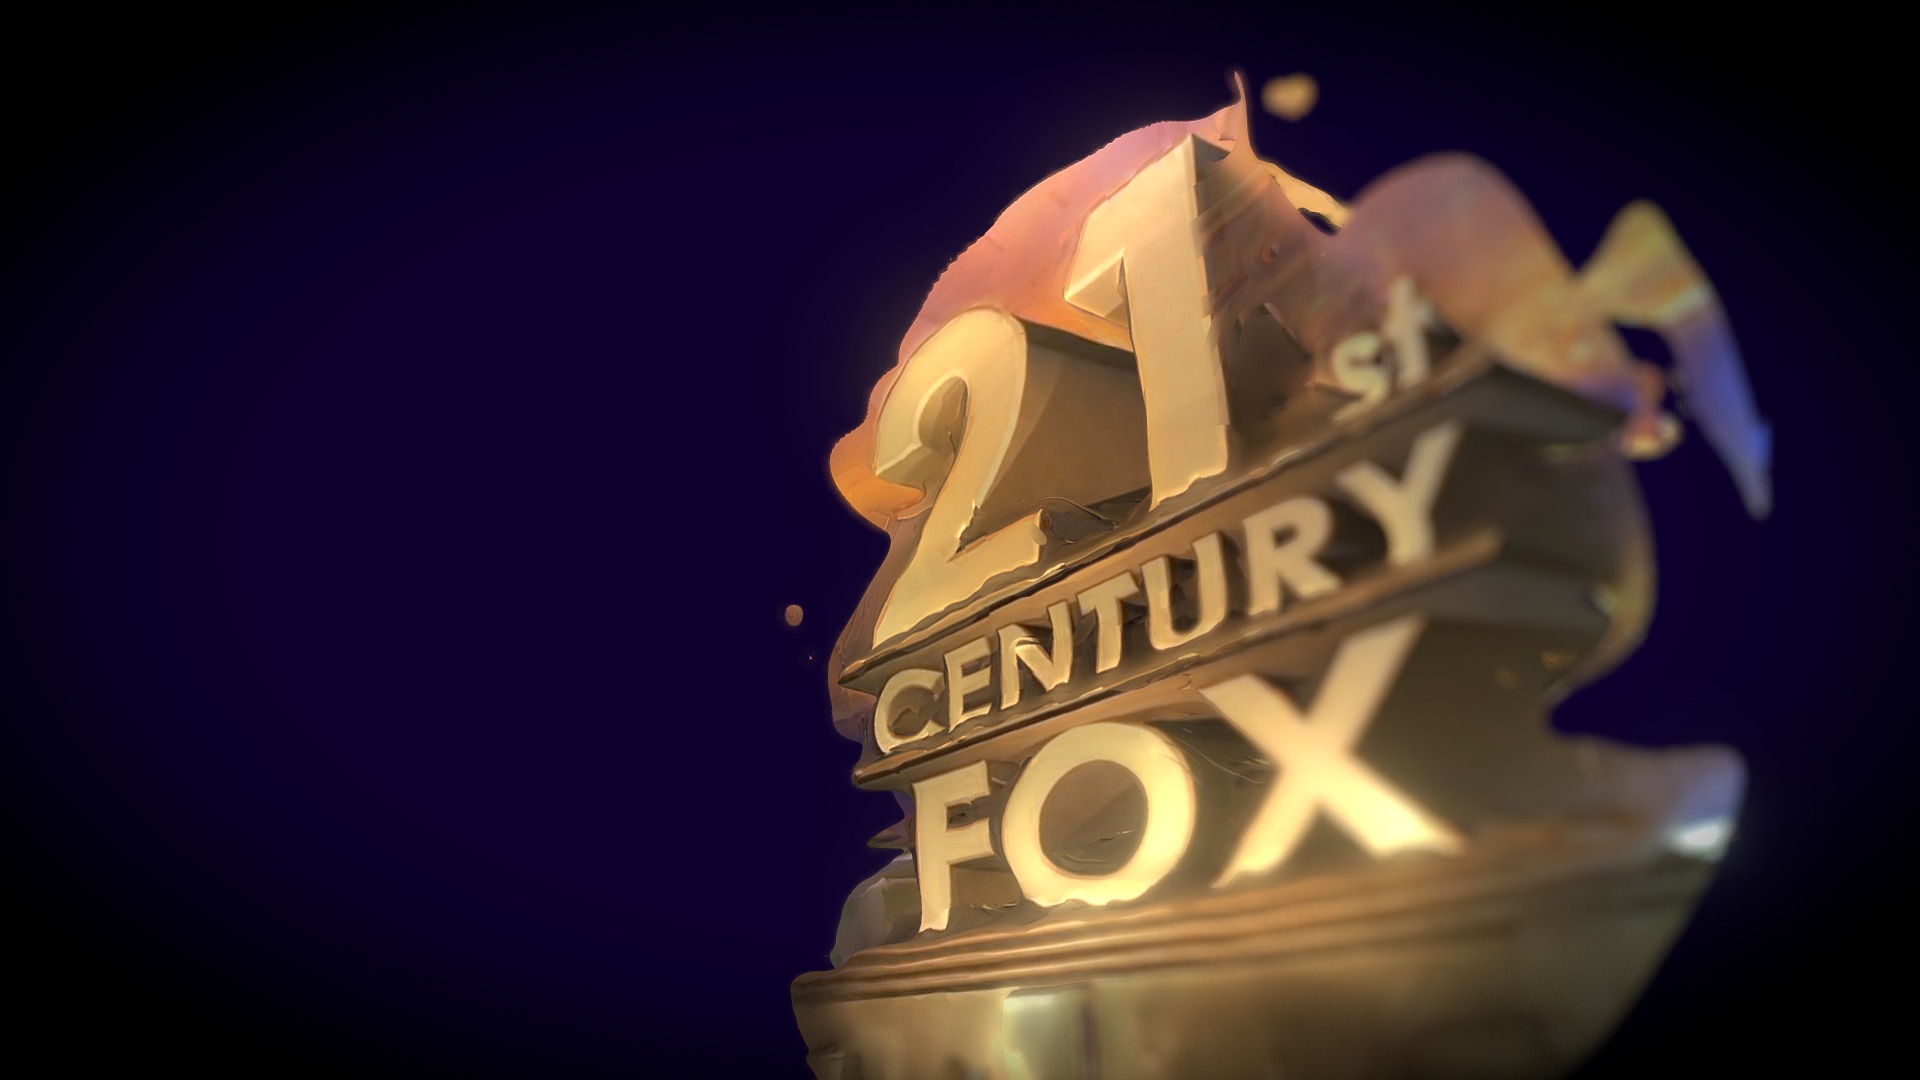 20th fox 3d. Century Fox 20th зажигалка. 20th Century Fox 1956. 20th Century Fox игрушки. 20th Century Fox Sketchfab 2009.